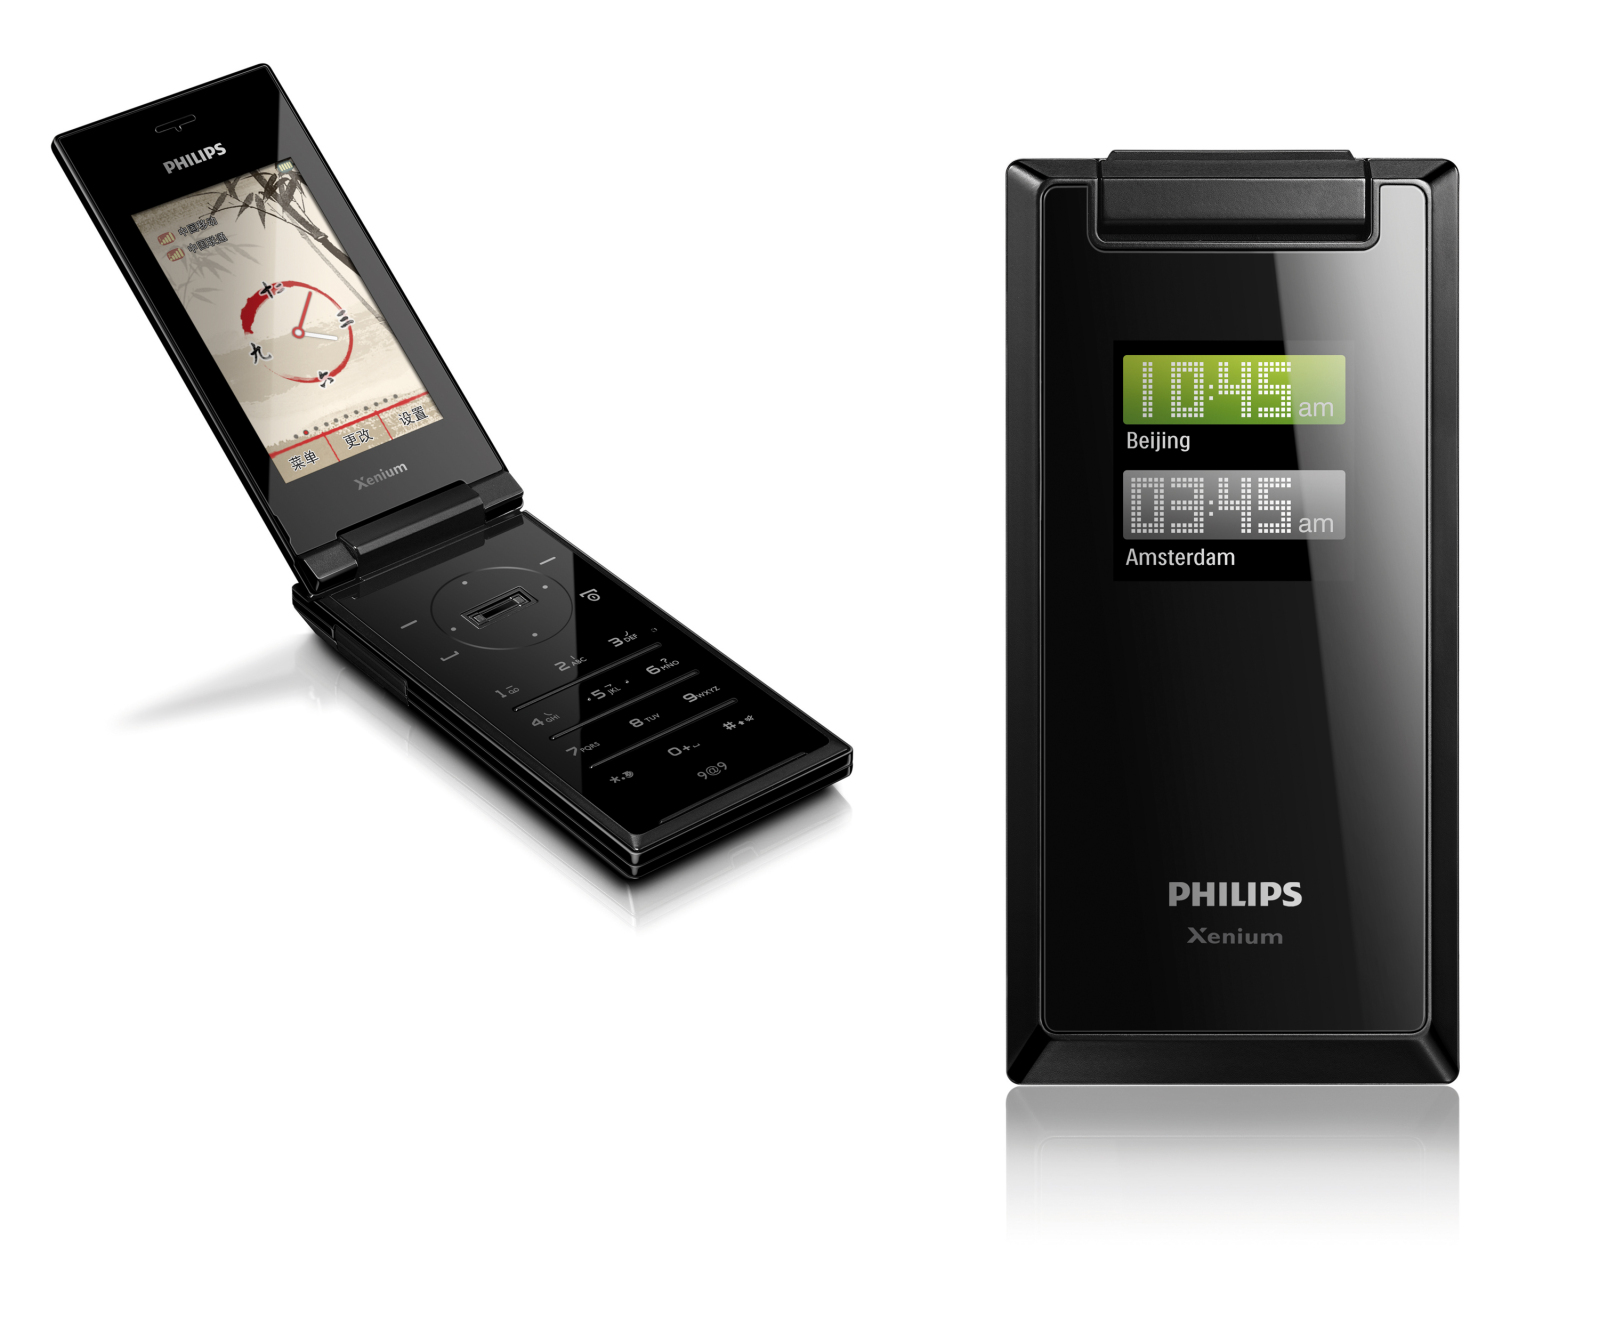 Филипс телефоны 2 сим. Philips Xenium x712. Philips Xenium v800. Philips Xenium x700. Раскладушка телефон Philips Xenium x700.